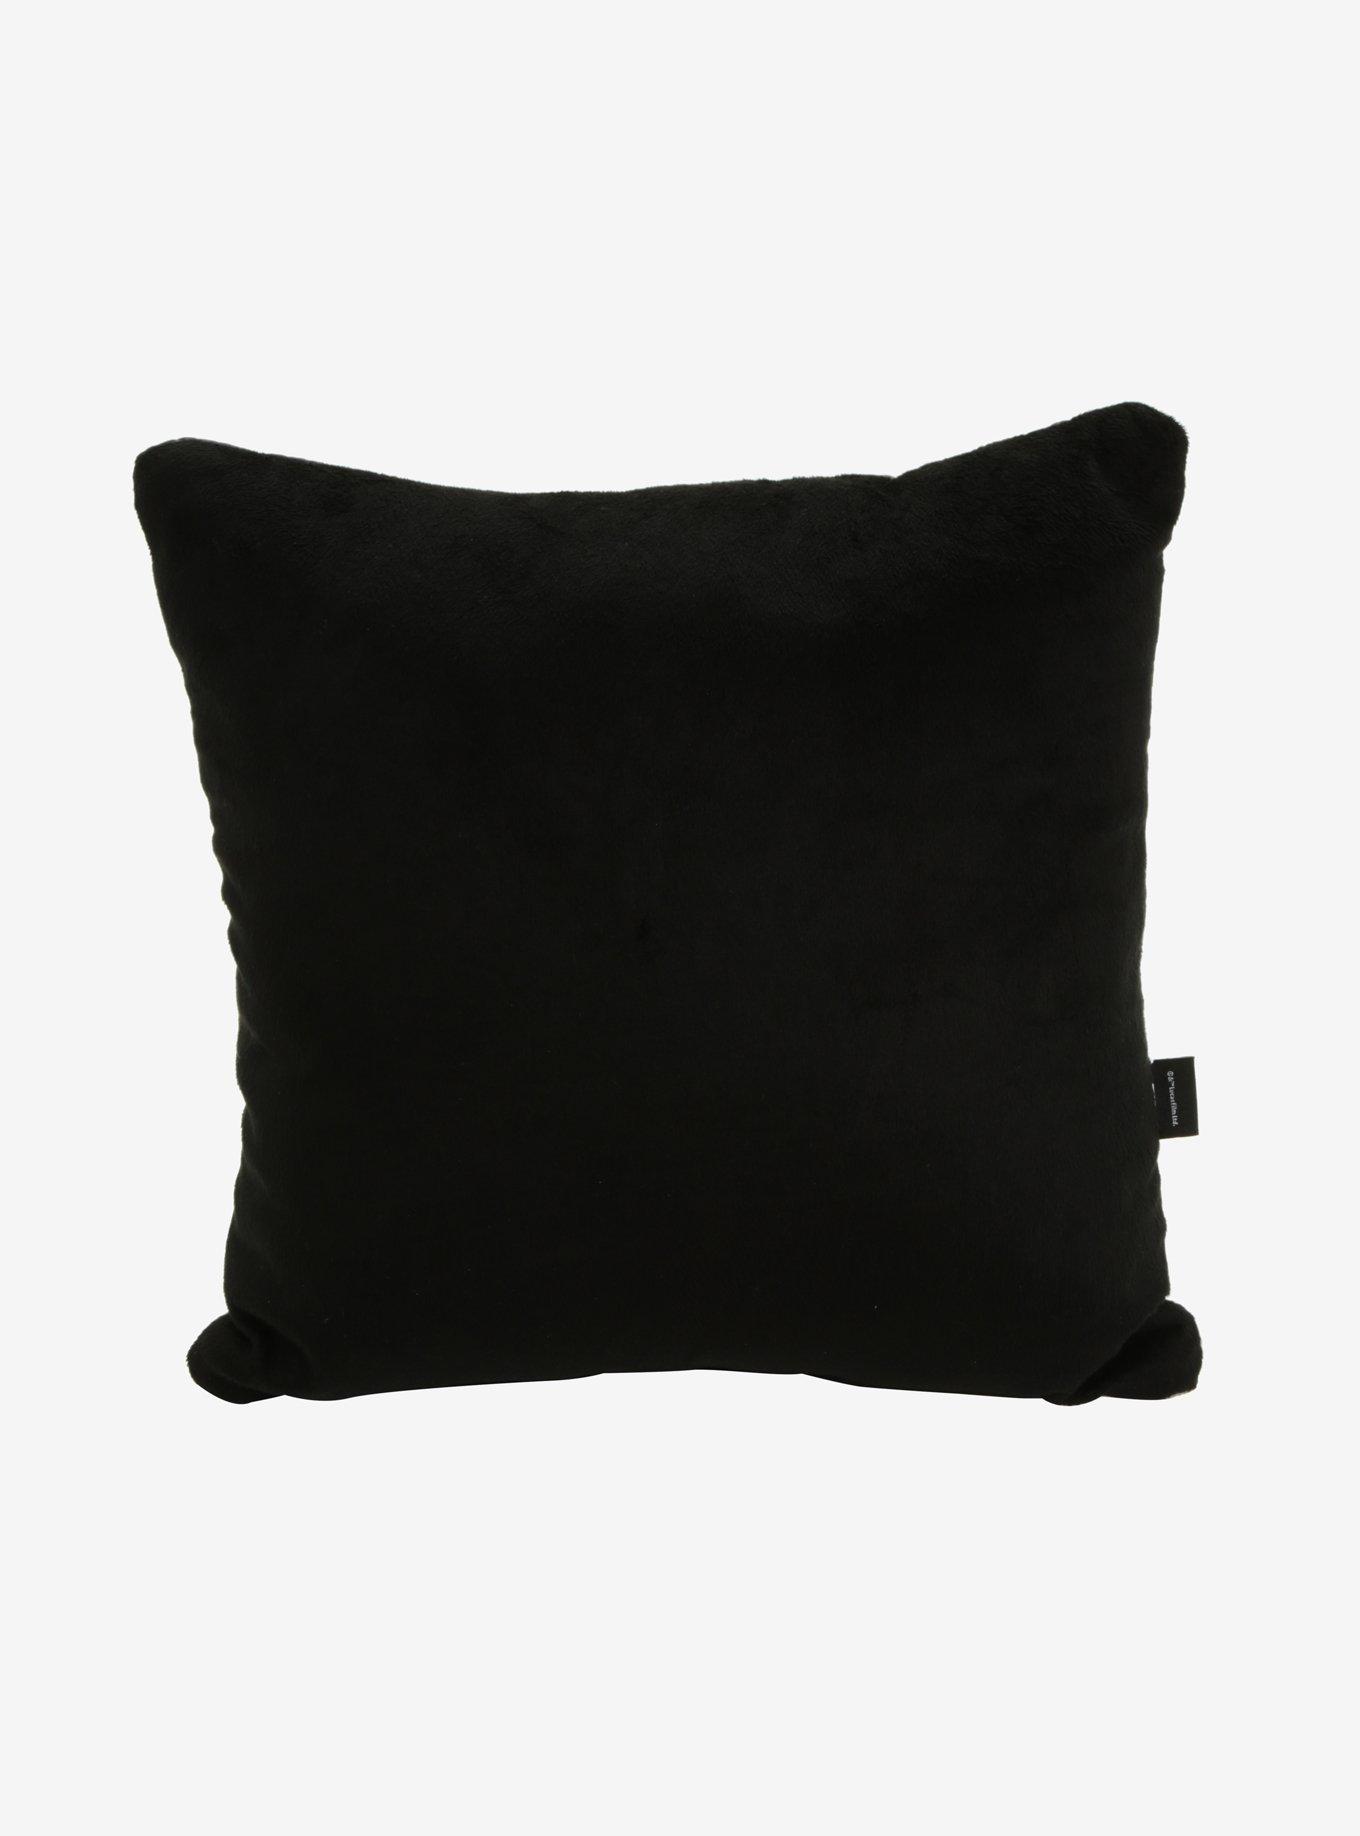 Star Wars Death Star Decorative Pillow, , alternate